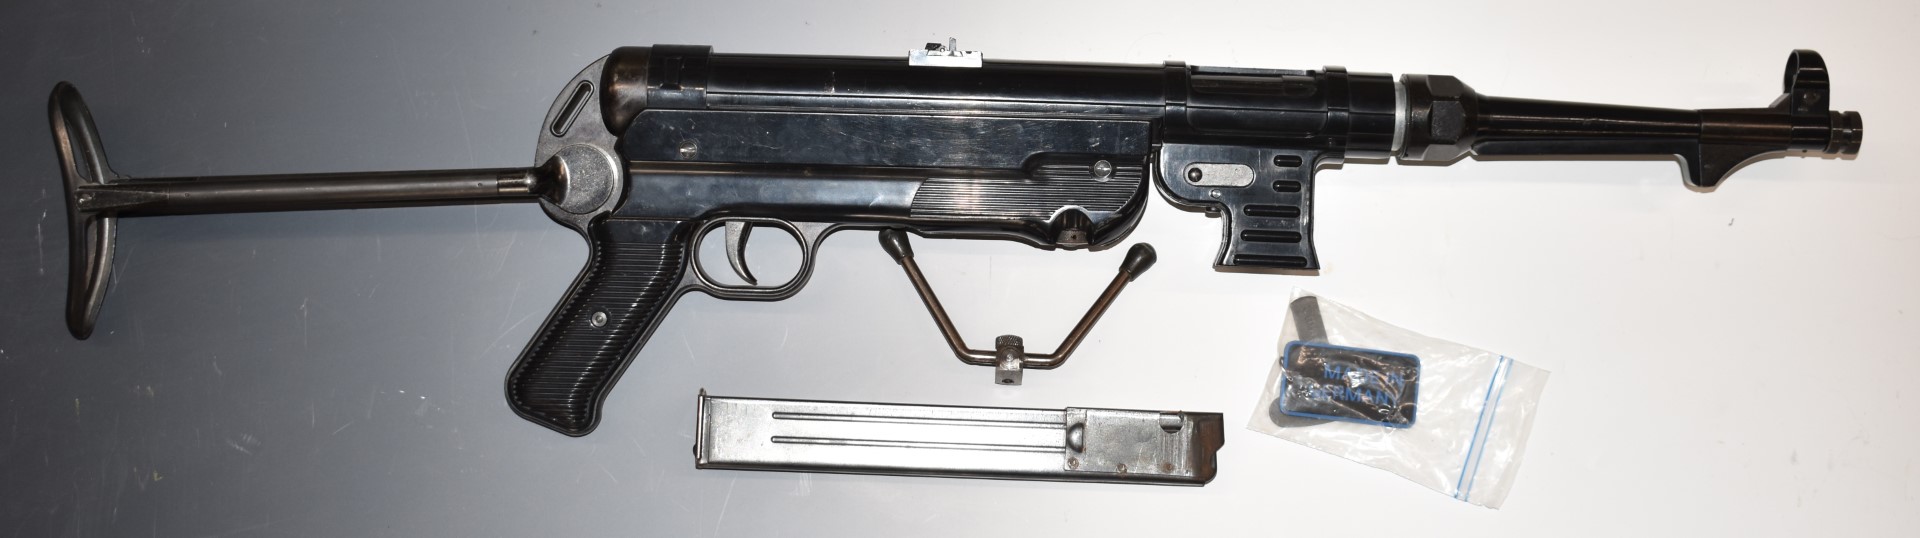 Marushin MP40 sub machine gun replica rifle with folding stock, extended magazine, pellet shells - Image 2 of 8